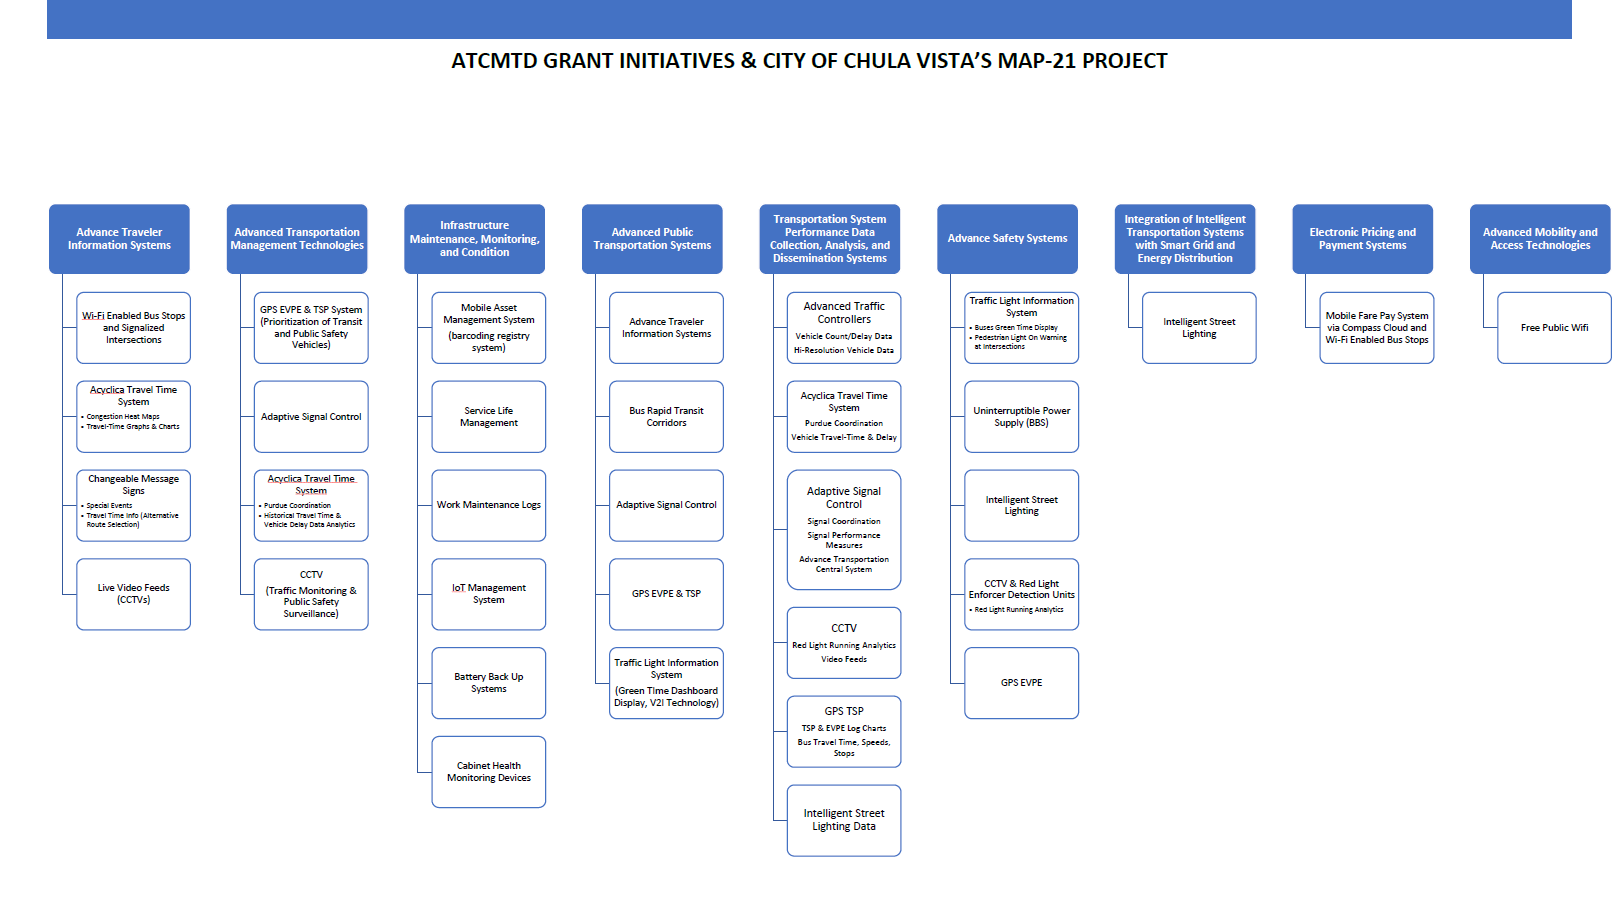 ATCMTD Grant Initiatives & City of Chula Vista's MAP-21 Project